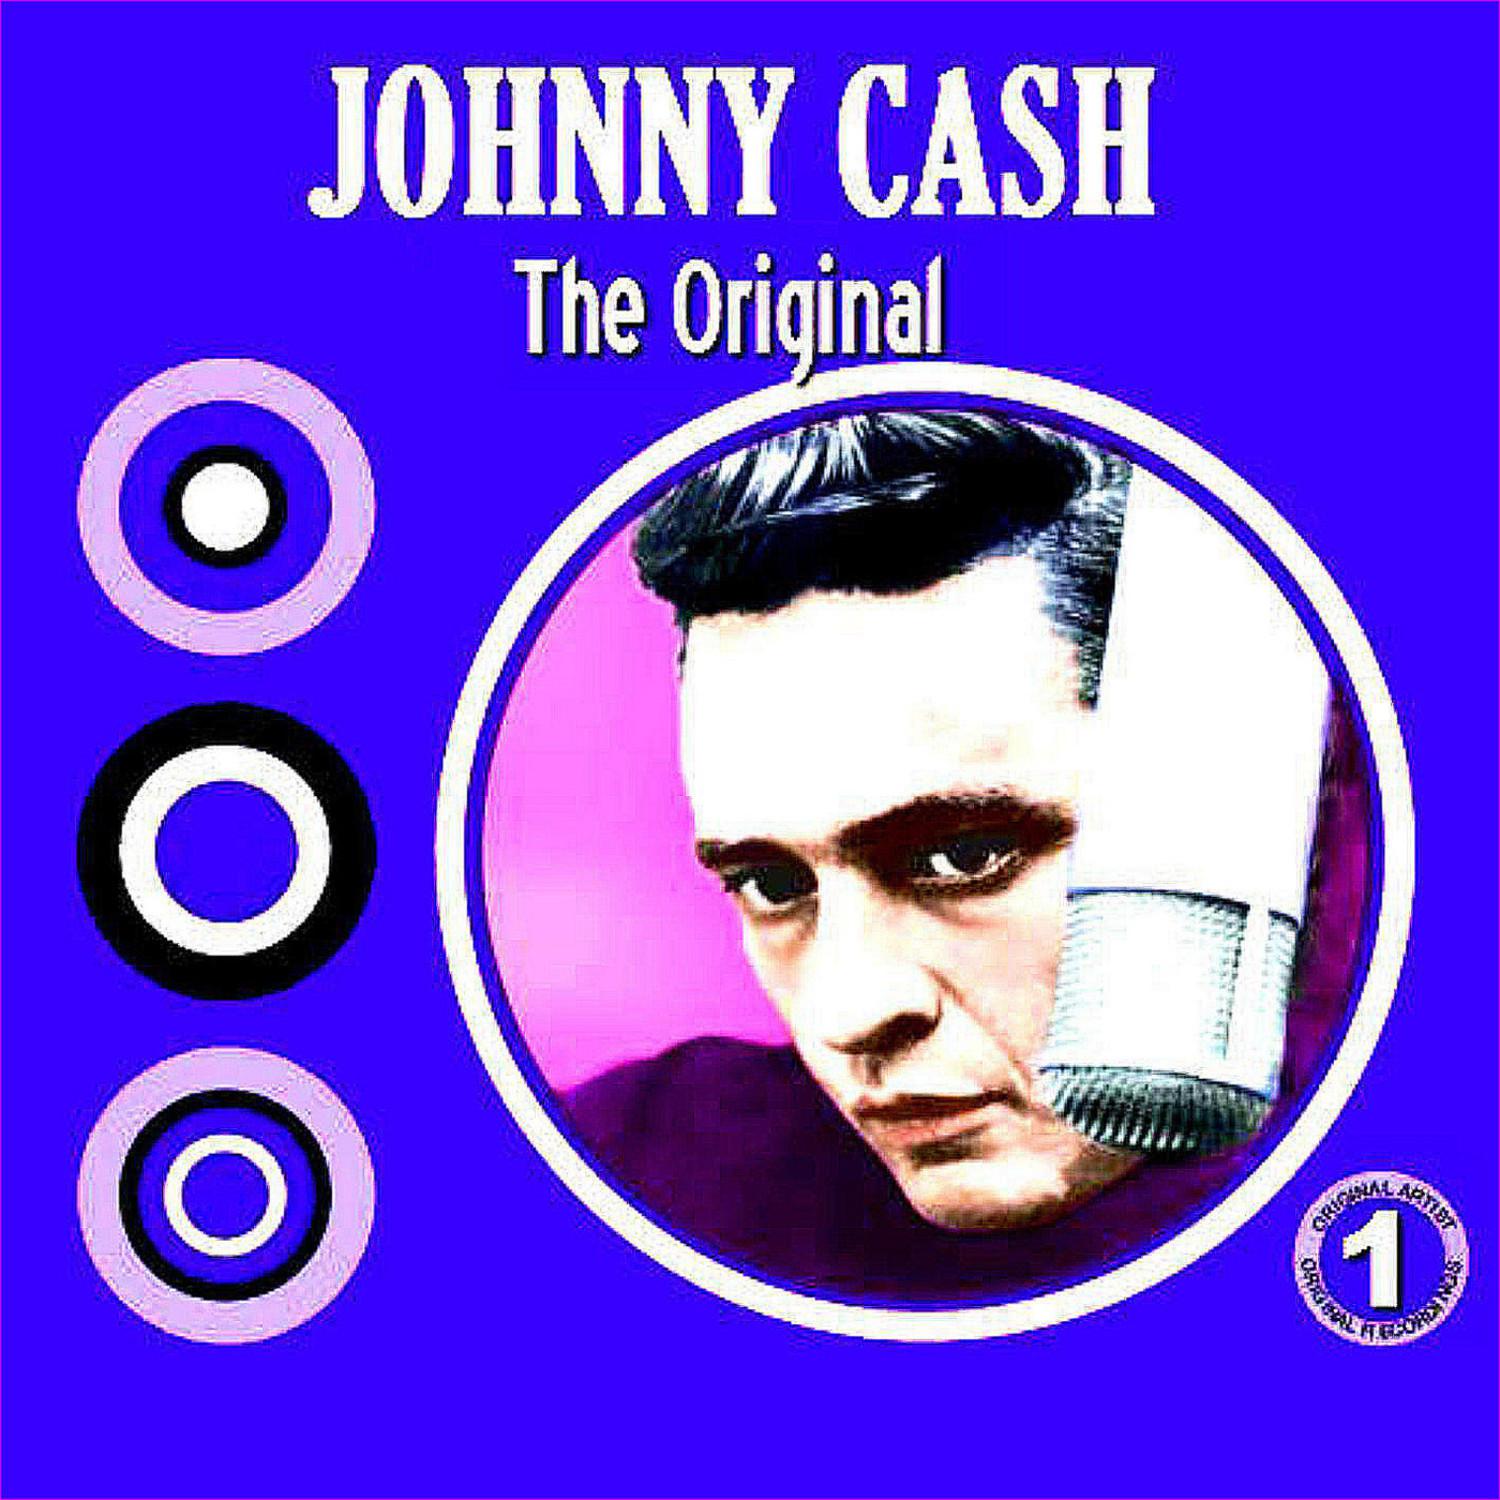 The Original Johnny Cash Volume 1